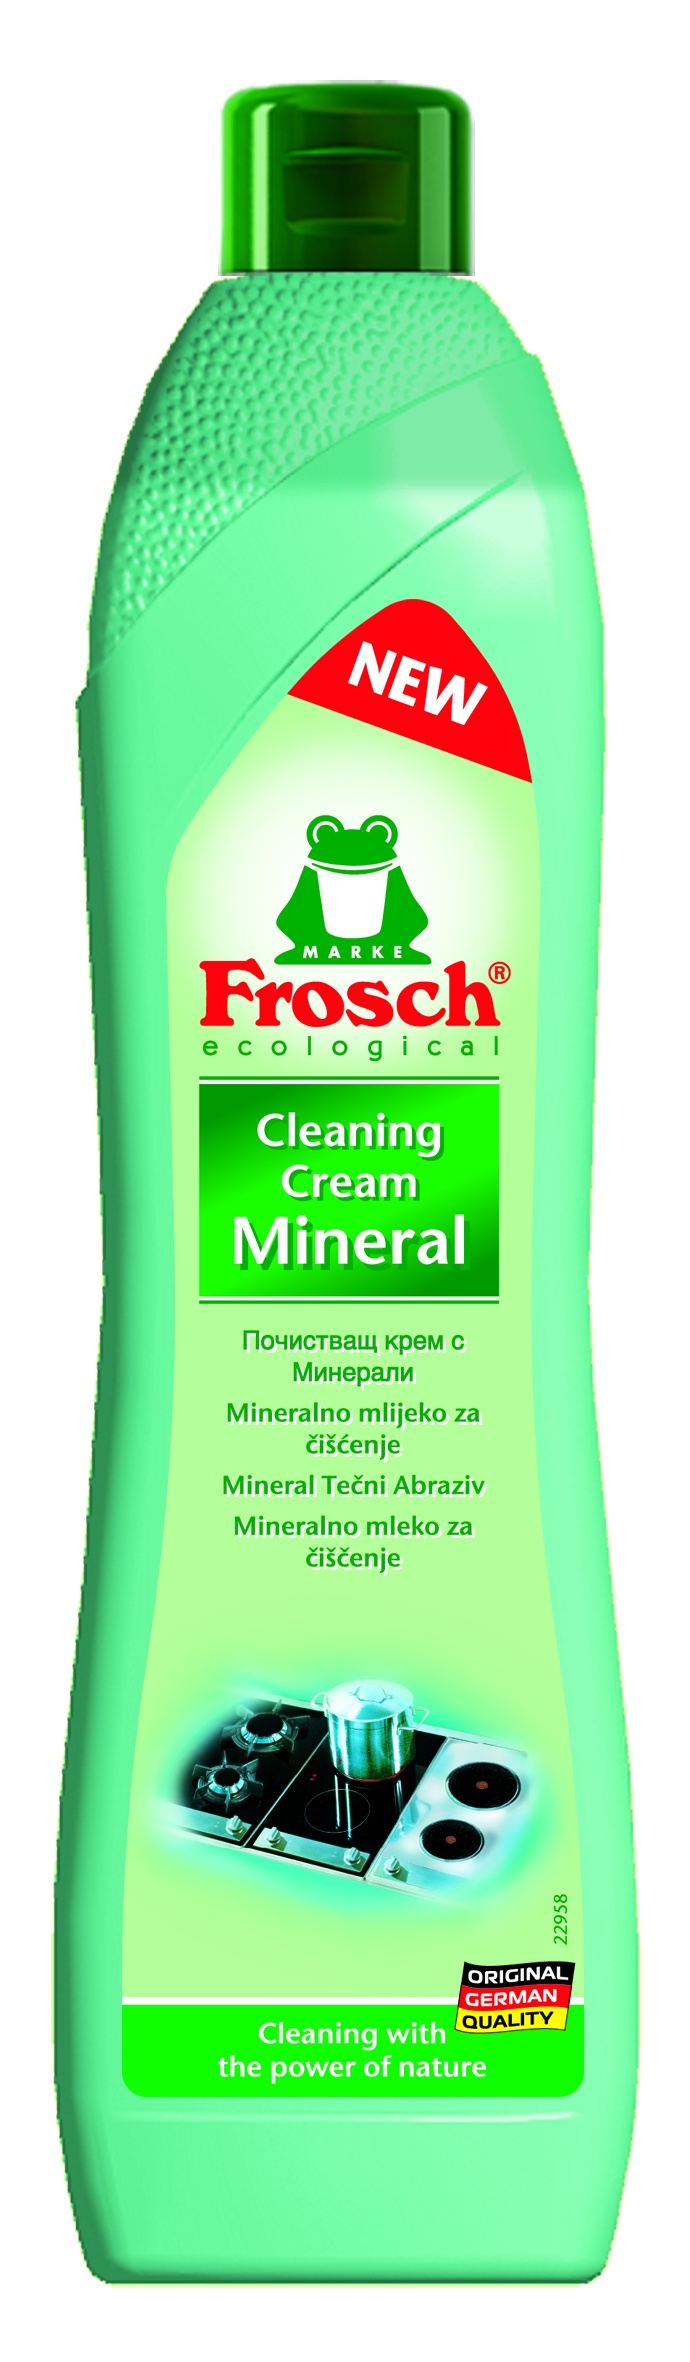 Slika za Abrazivno sredstvo za čišćenje mineral Frosch 500ml